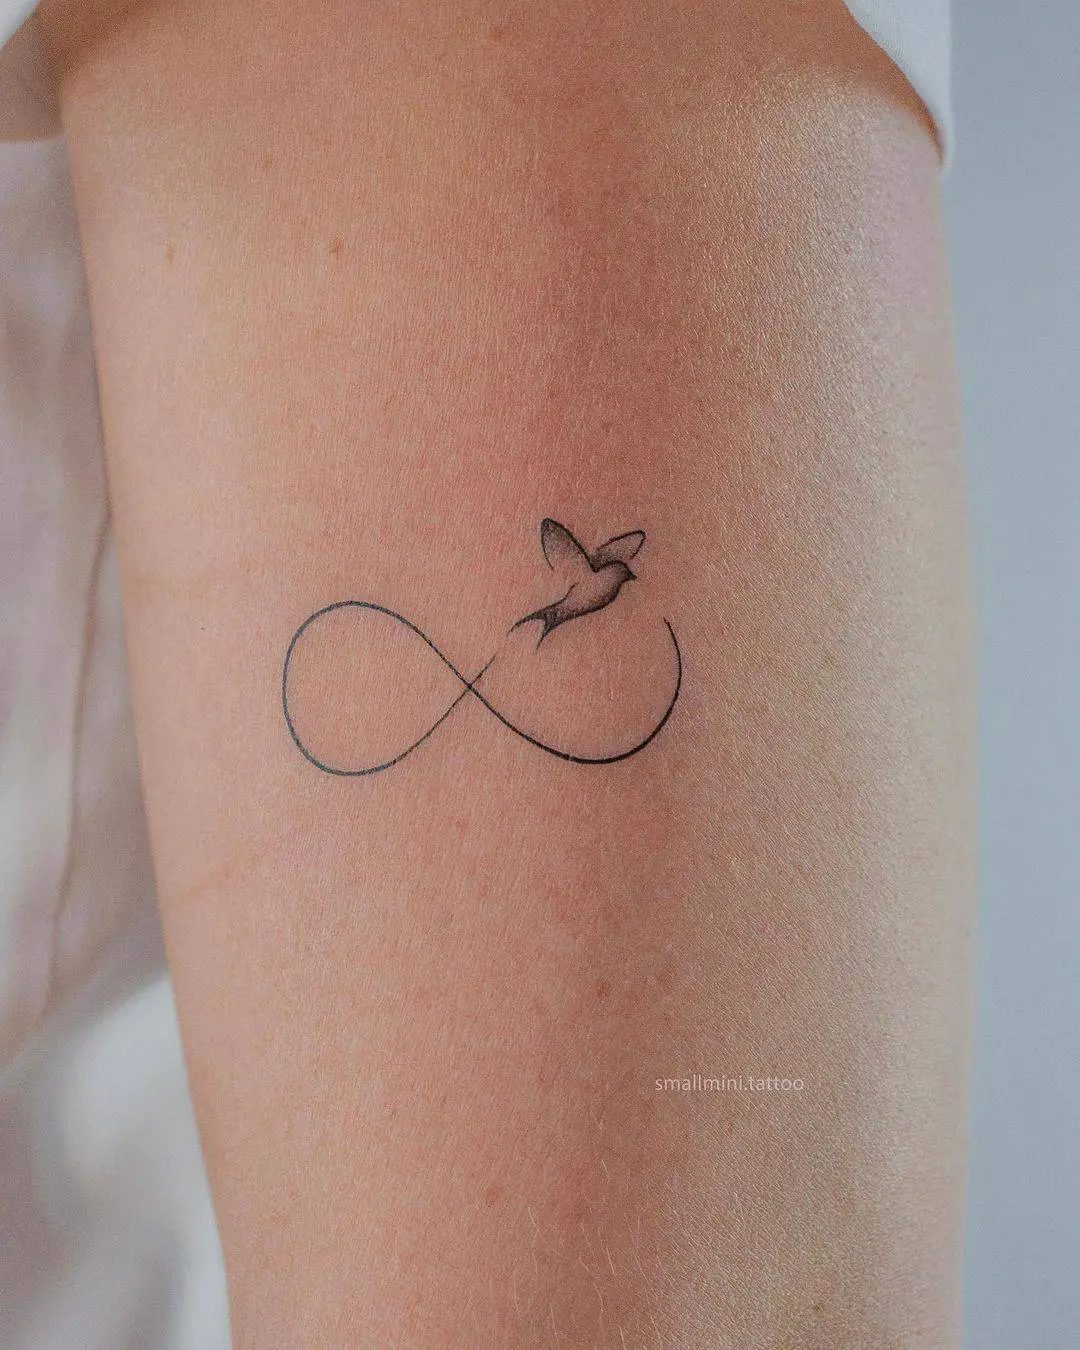 Small bird tattoo with infinity by small.minitattoo